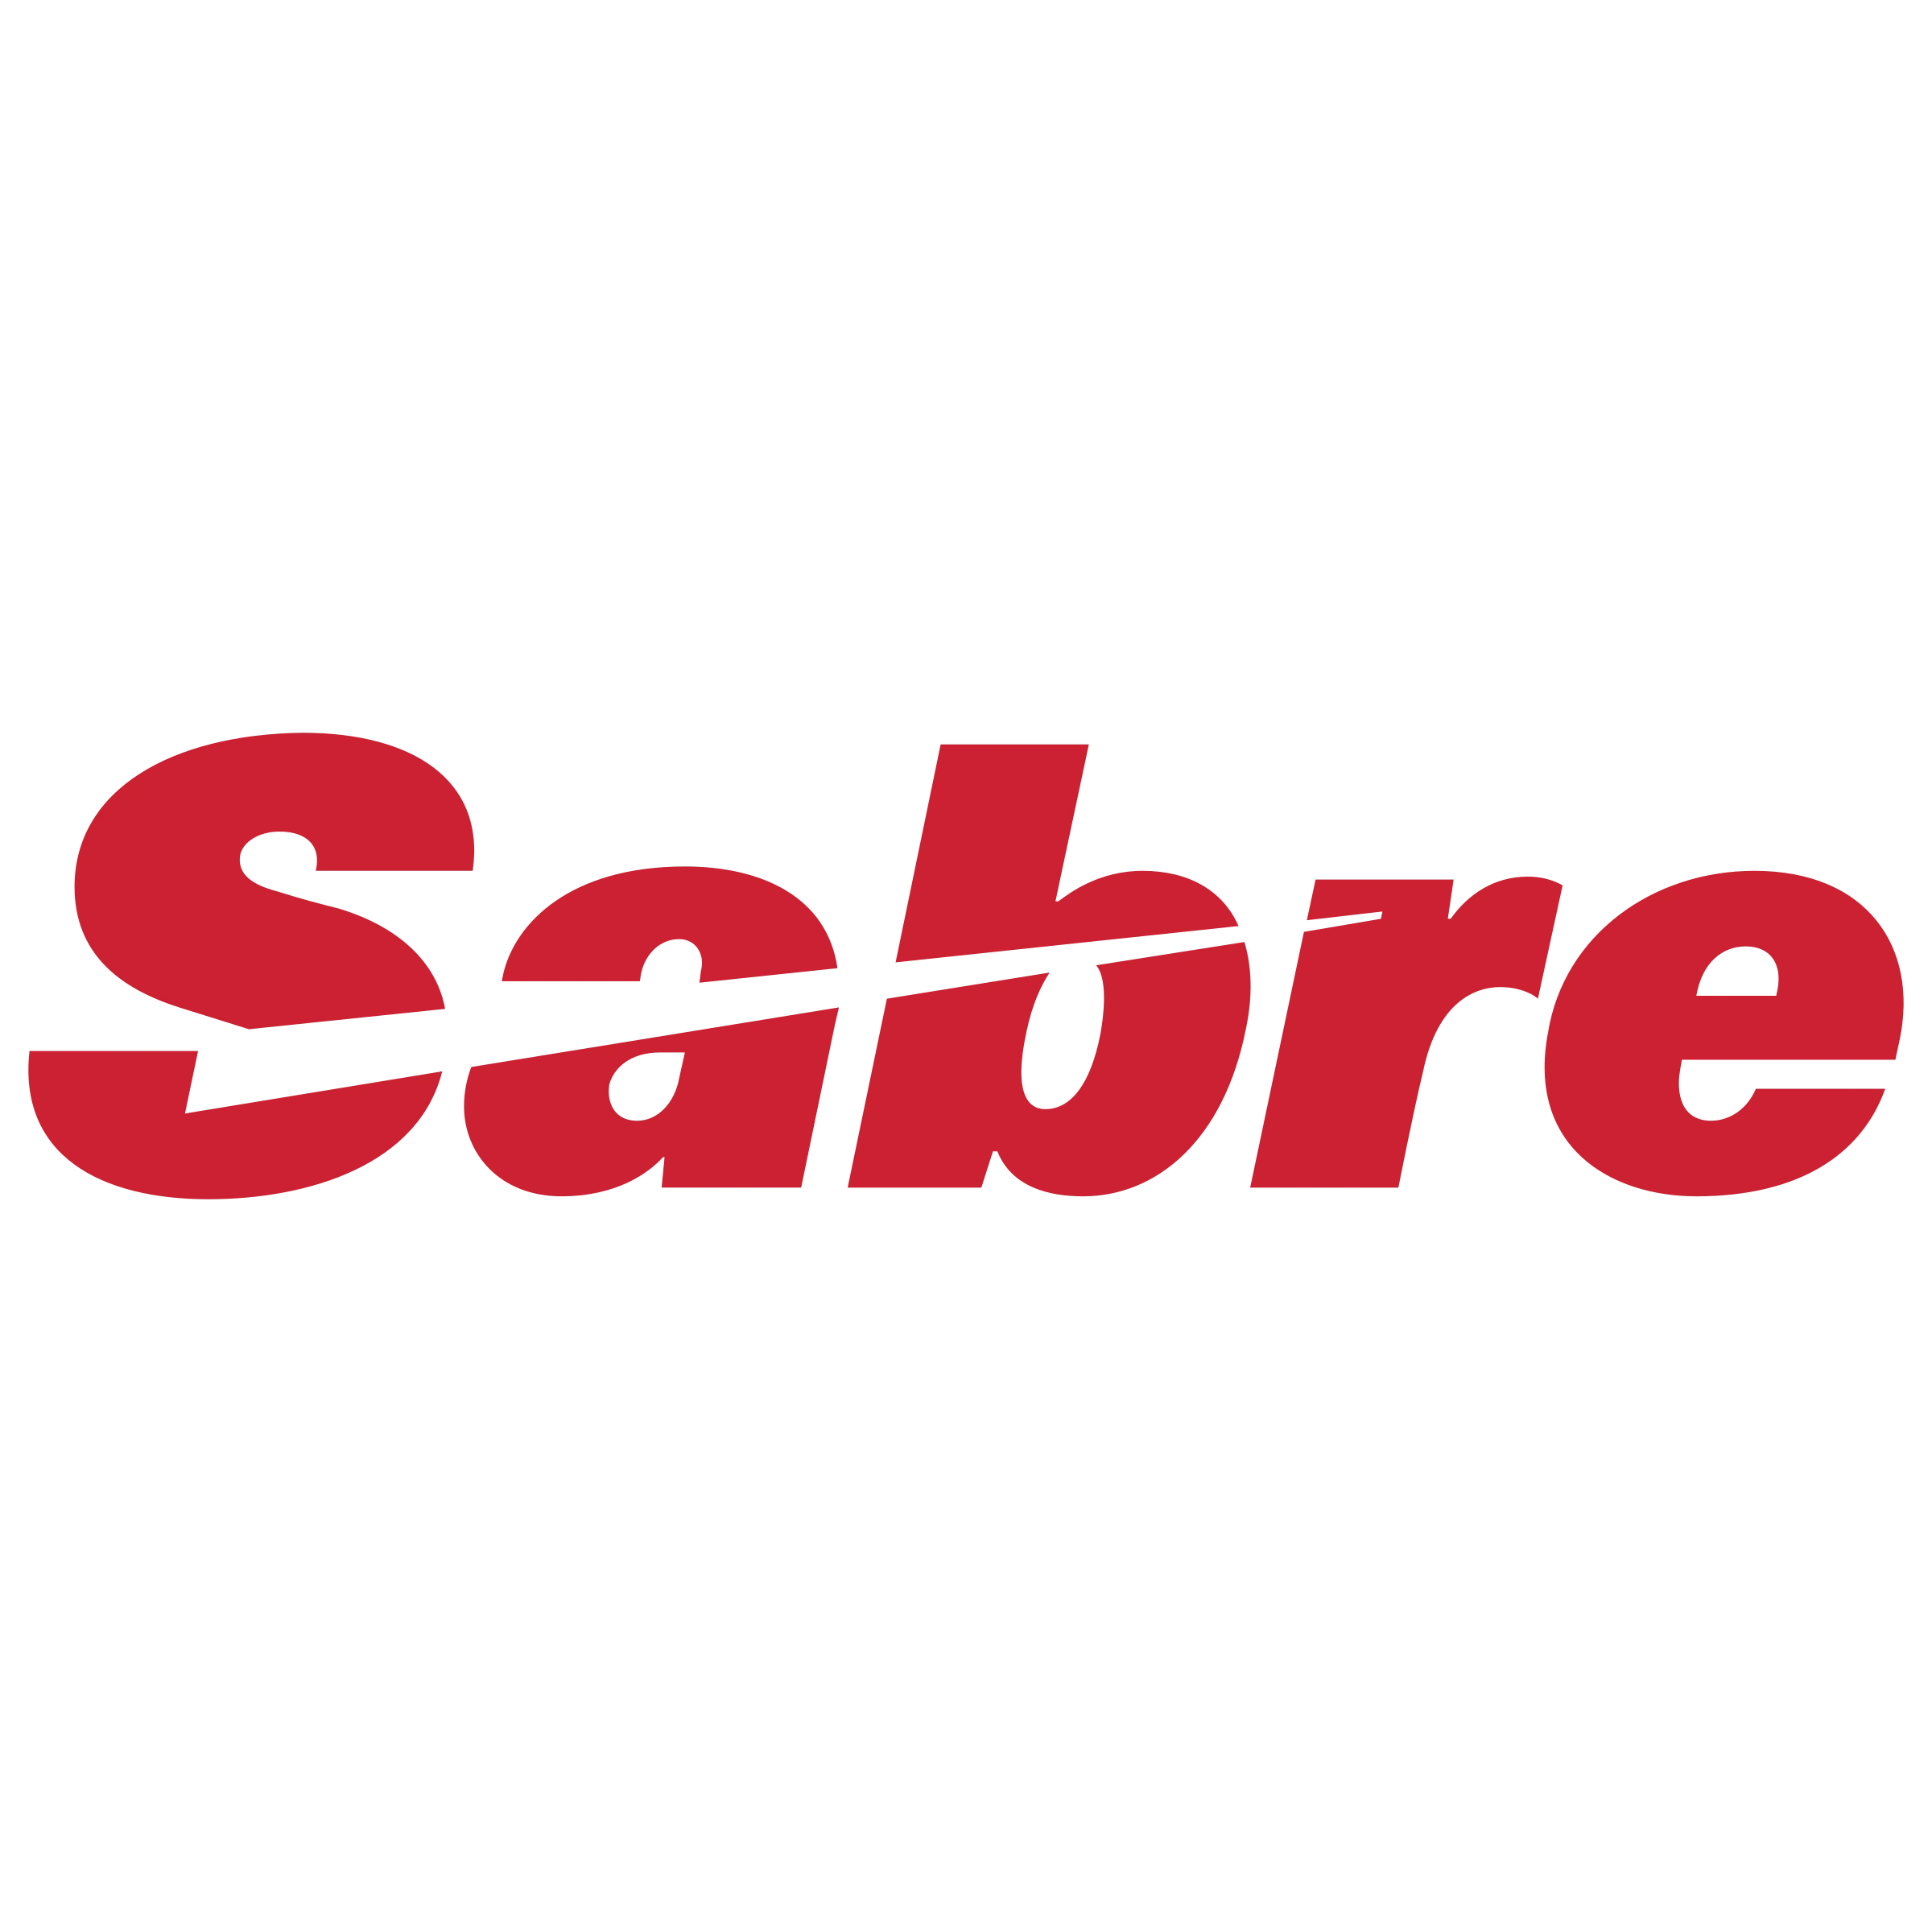 1825-sabre-2-logo-png-transparent-16924390643298.png